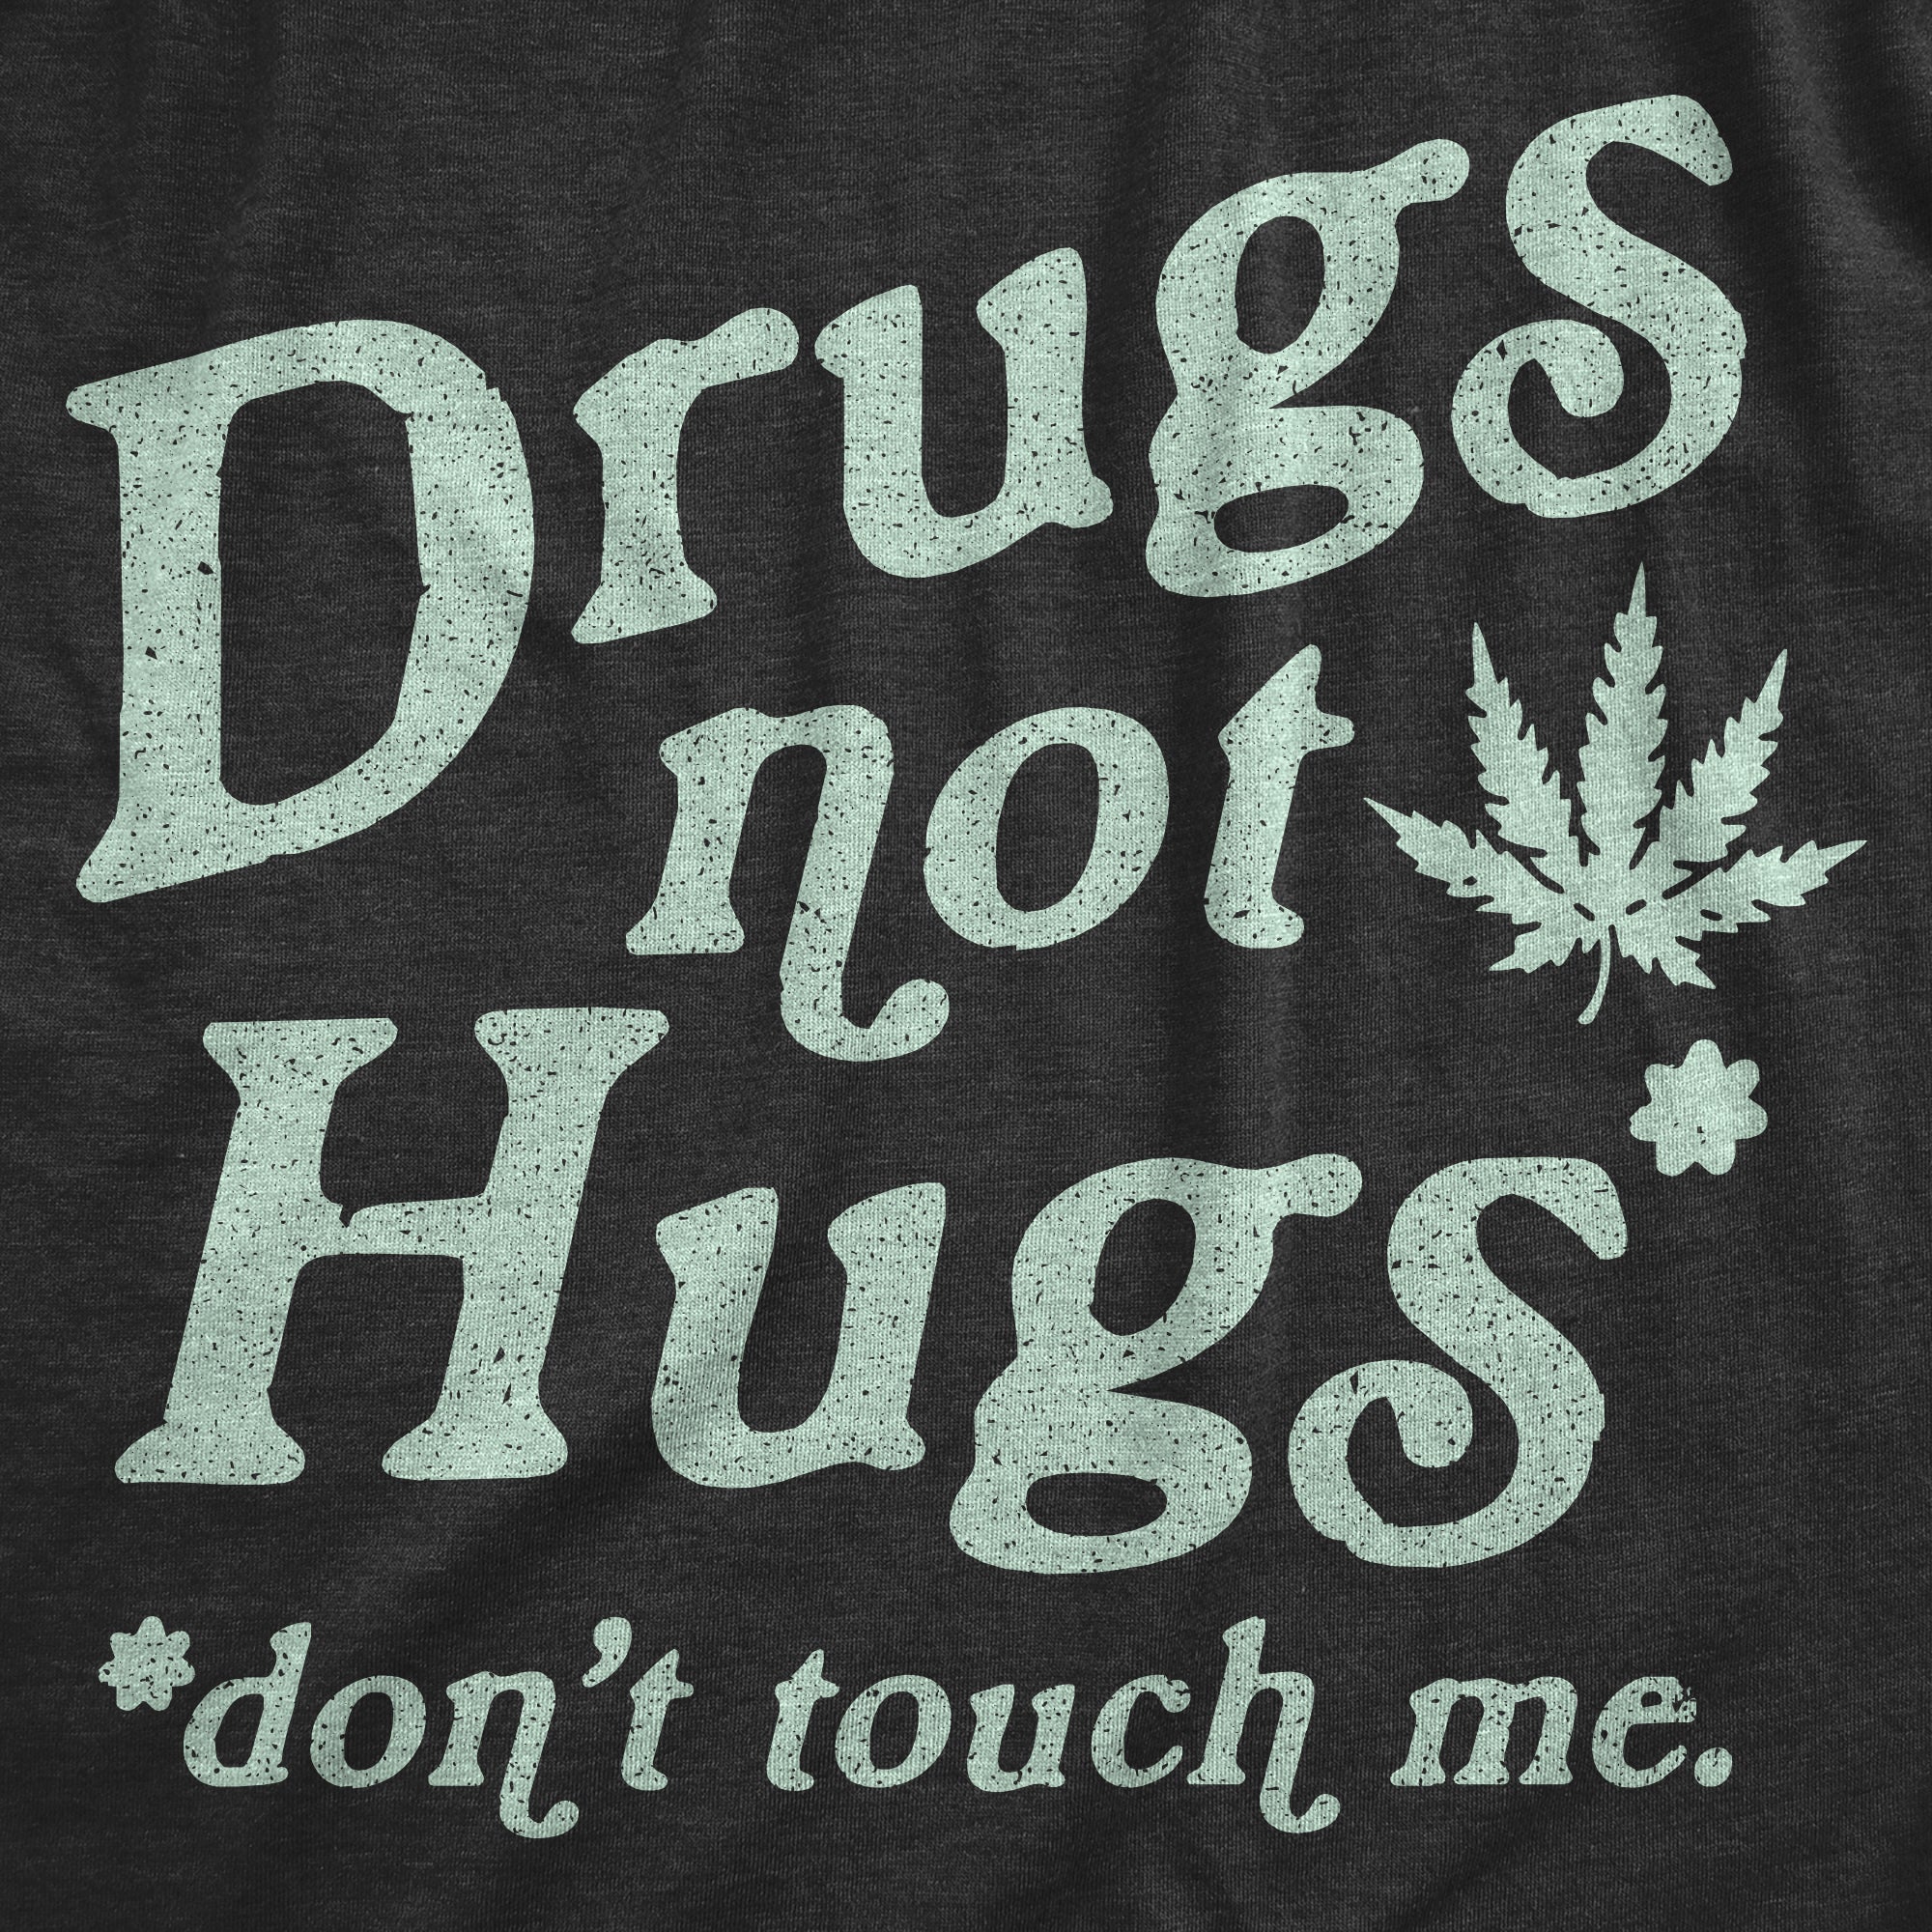 Funny Heather Black - Not Hugs Drugs Not Hugs Coronavirus Mens T Shirt Nerdy 420 Tee